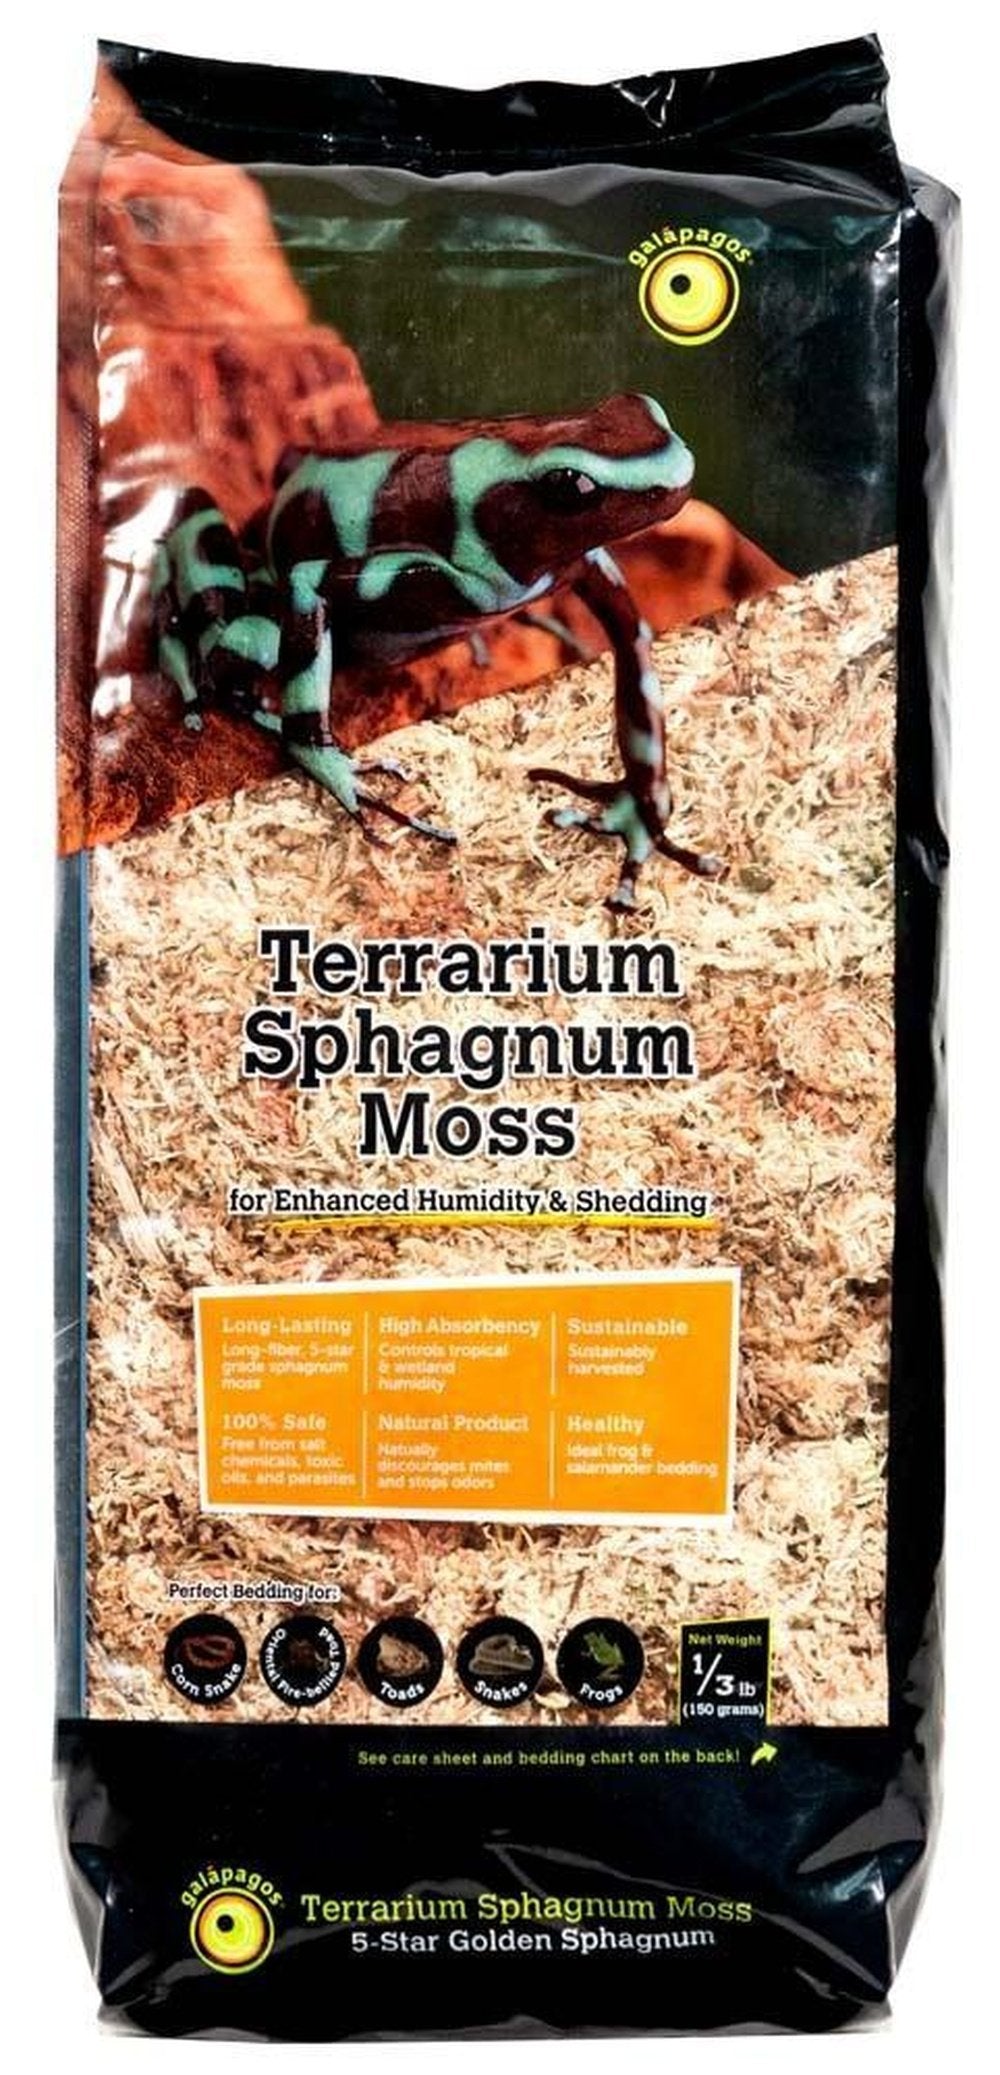 Galapagos Blond Sphagnum Moss, 1/3 lb